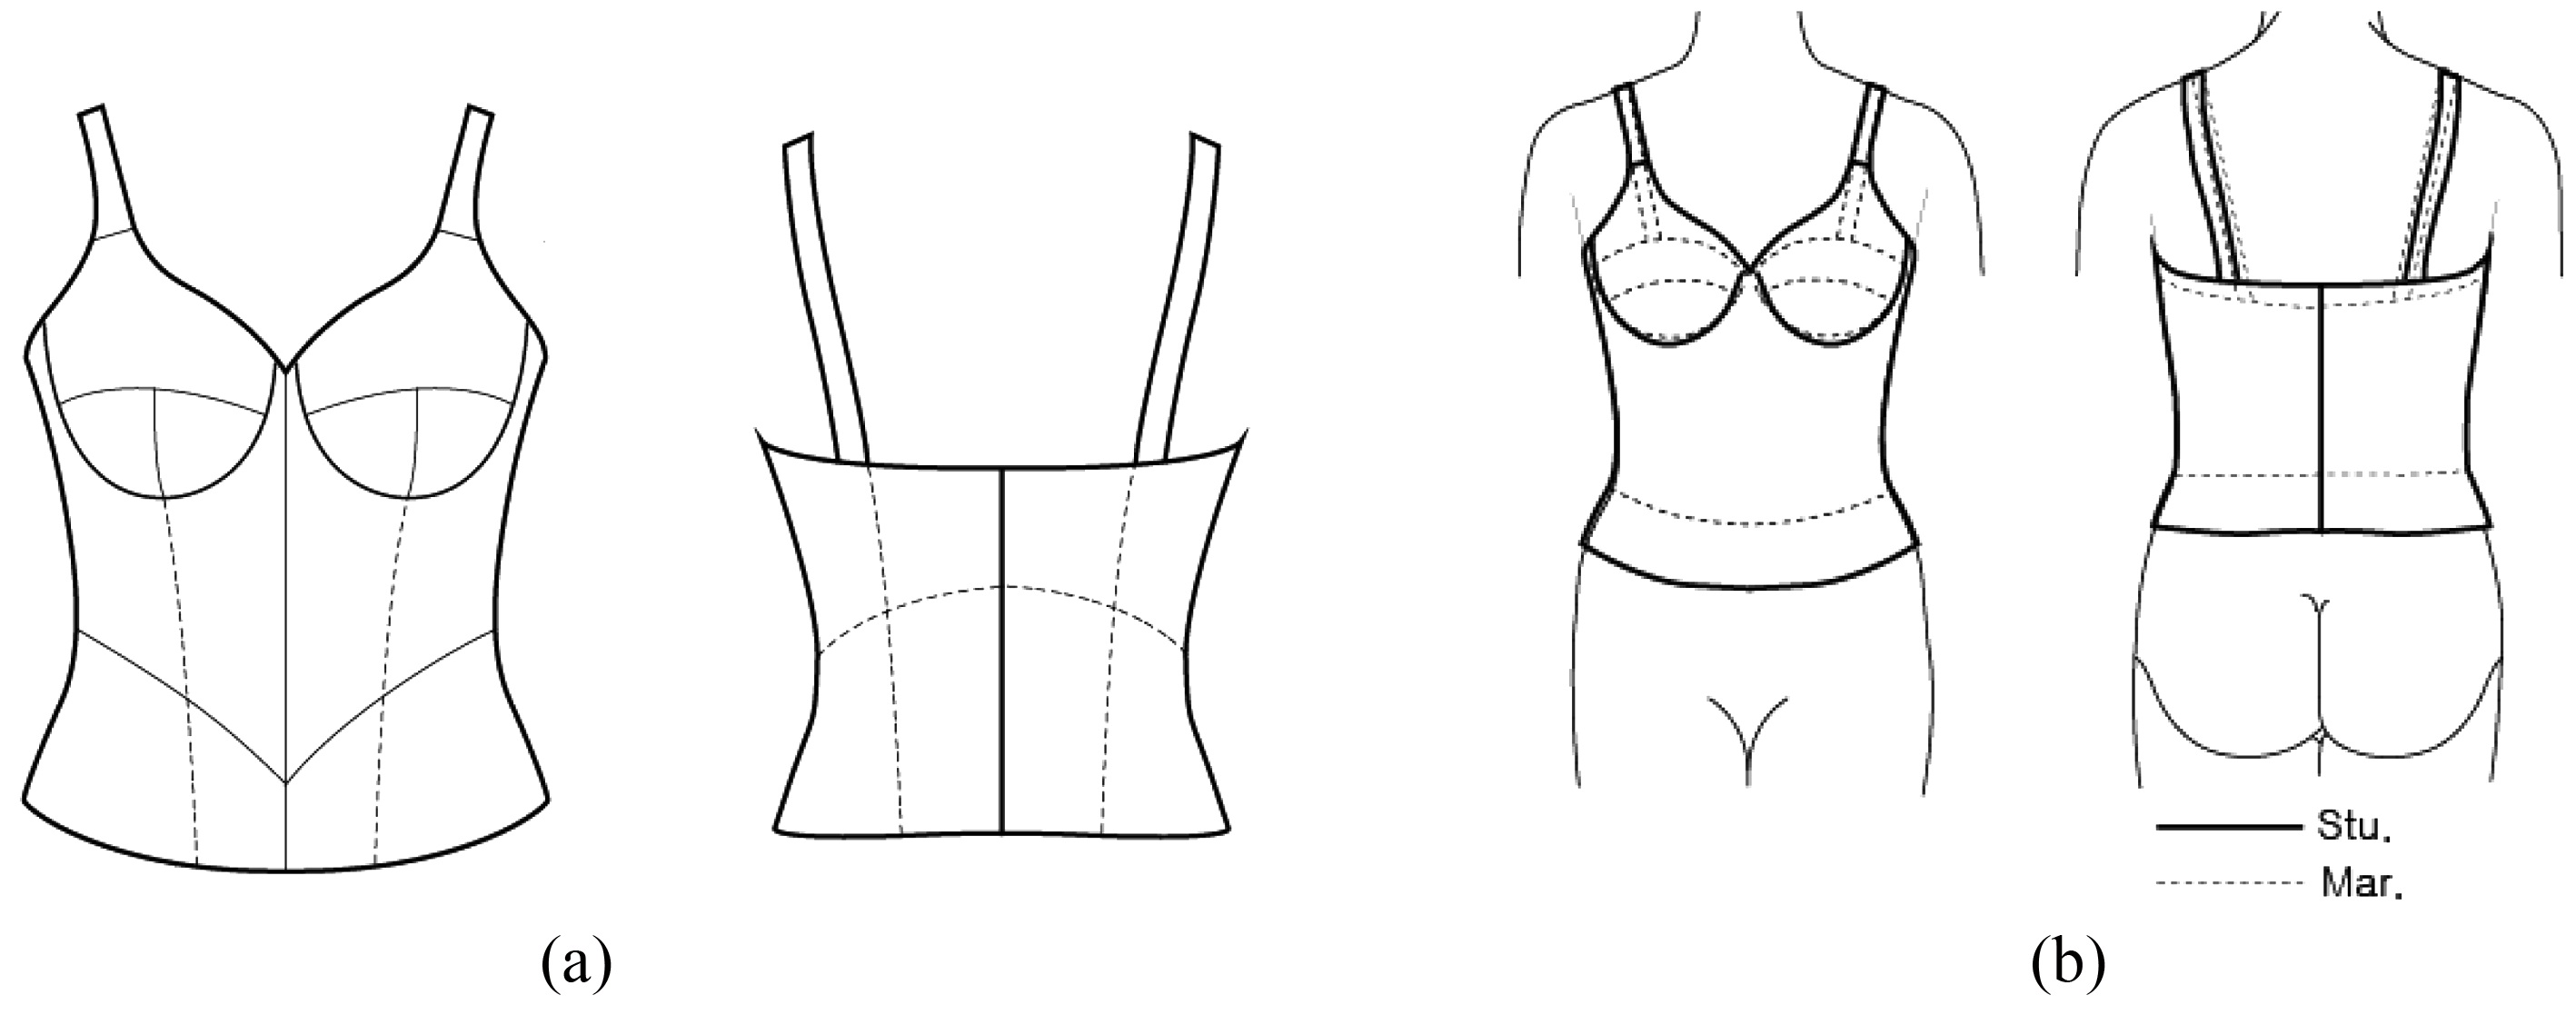 Design Line(illustration); (a) study clothing, (b) study and market clothing.